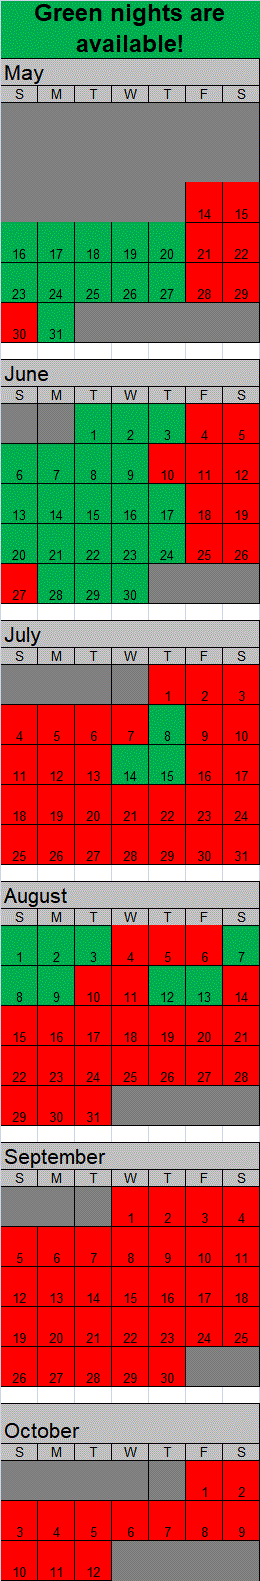 Lakeview Campsite 1 Calendar